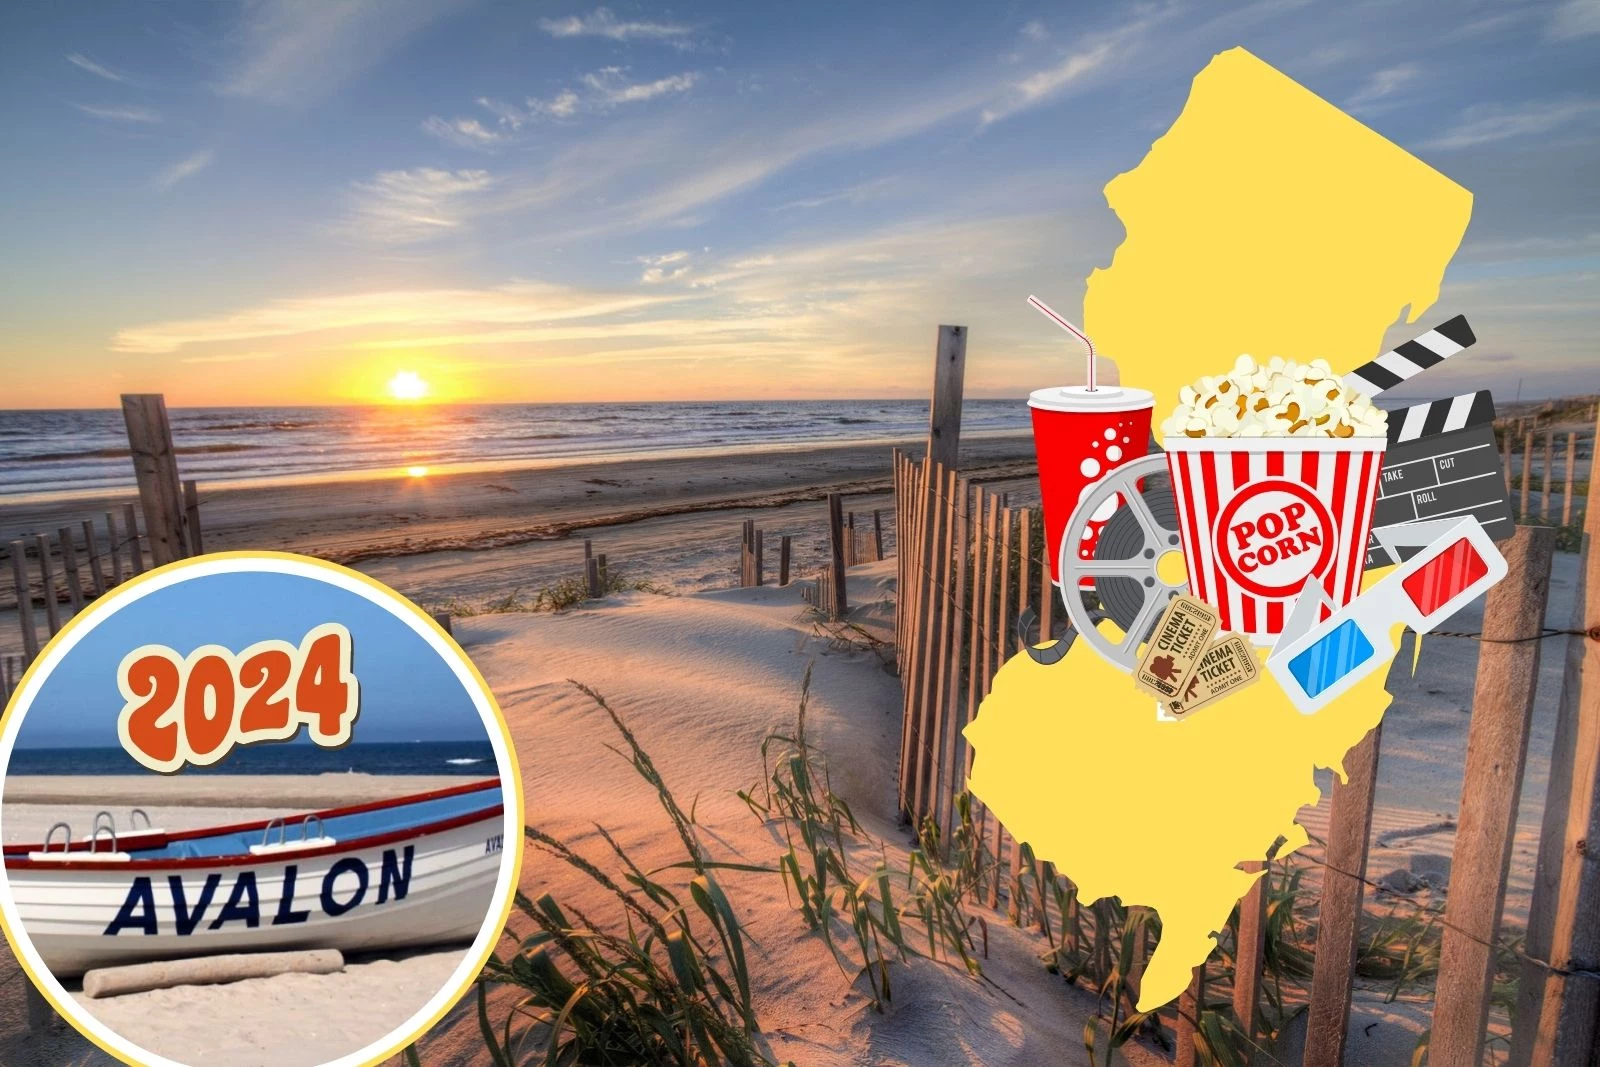 Movies on Beach in Avalon NJ 2024